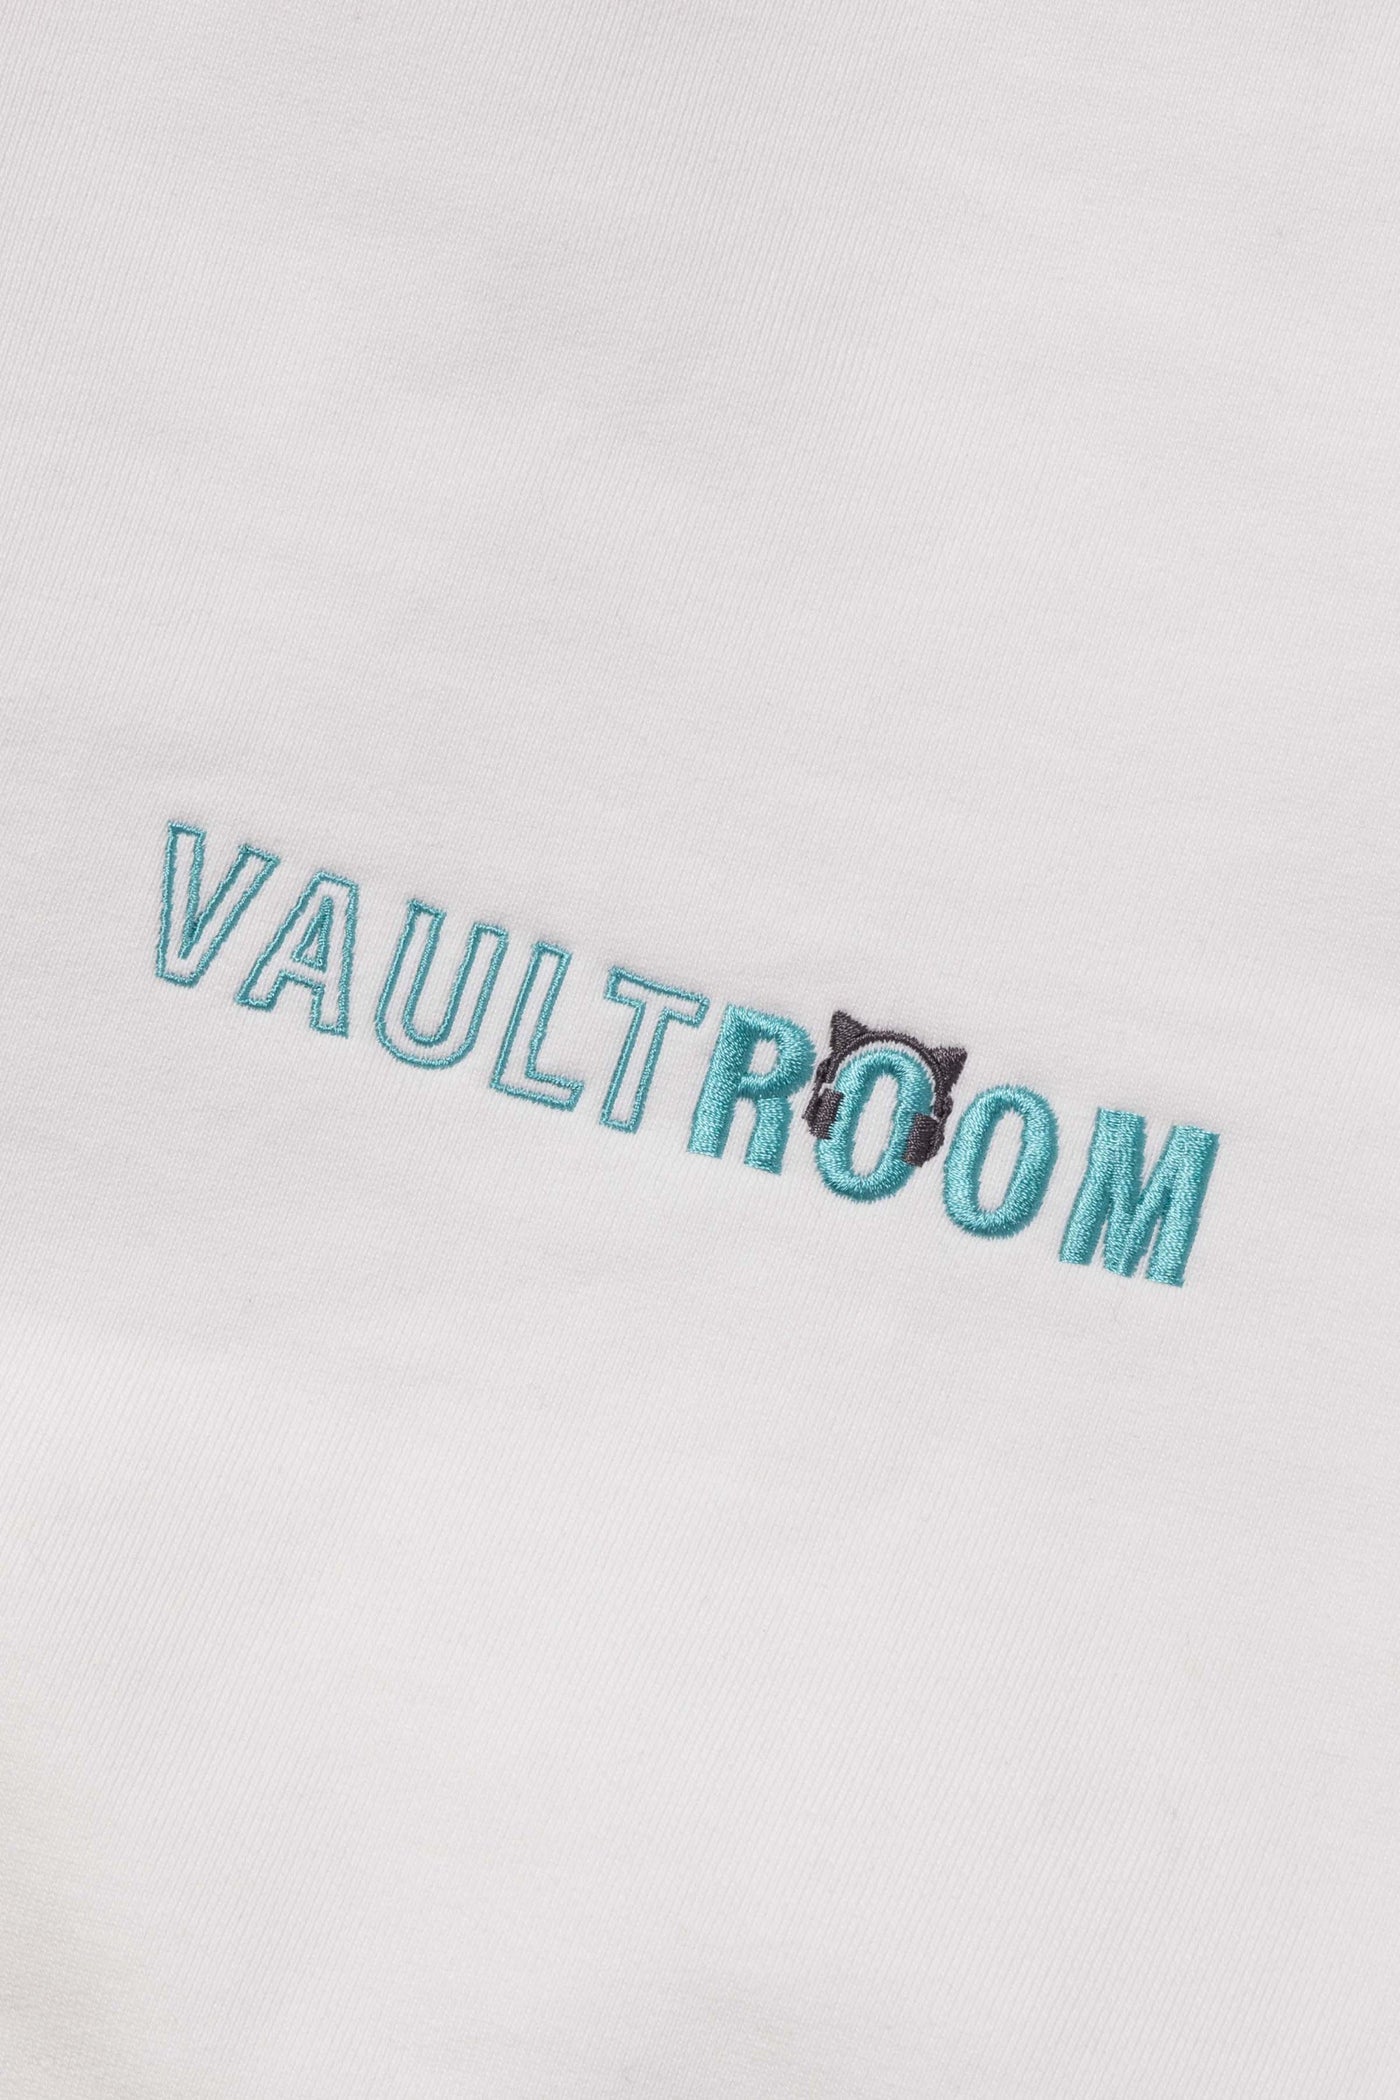 vaultroom 猫麦とろろ VR × TORORO TEE / WHT 新品-